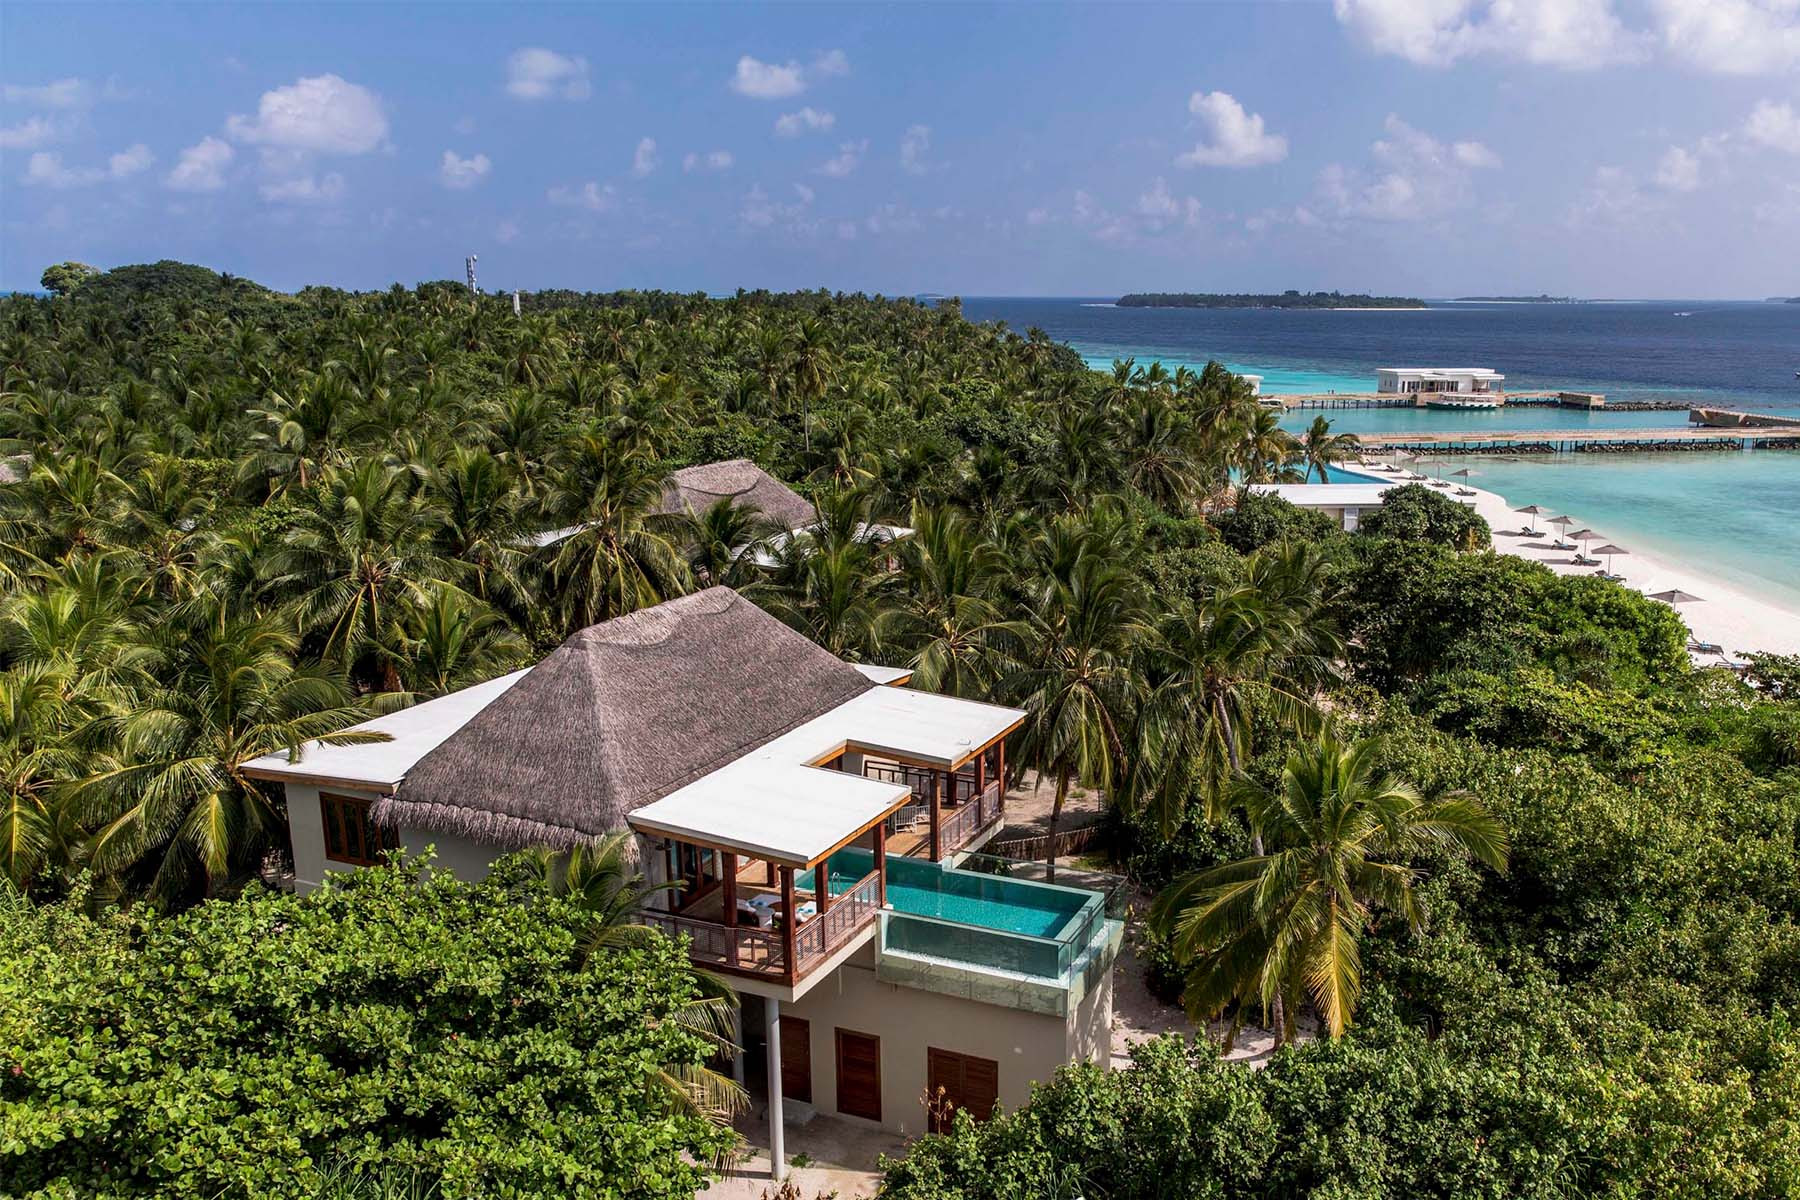 Amilla Maldives - Where Nature Meets Luxury